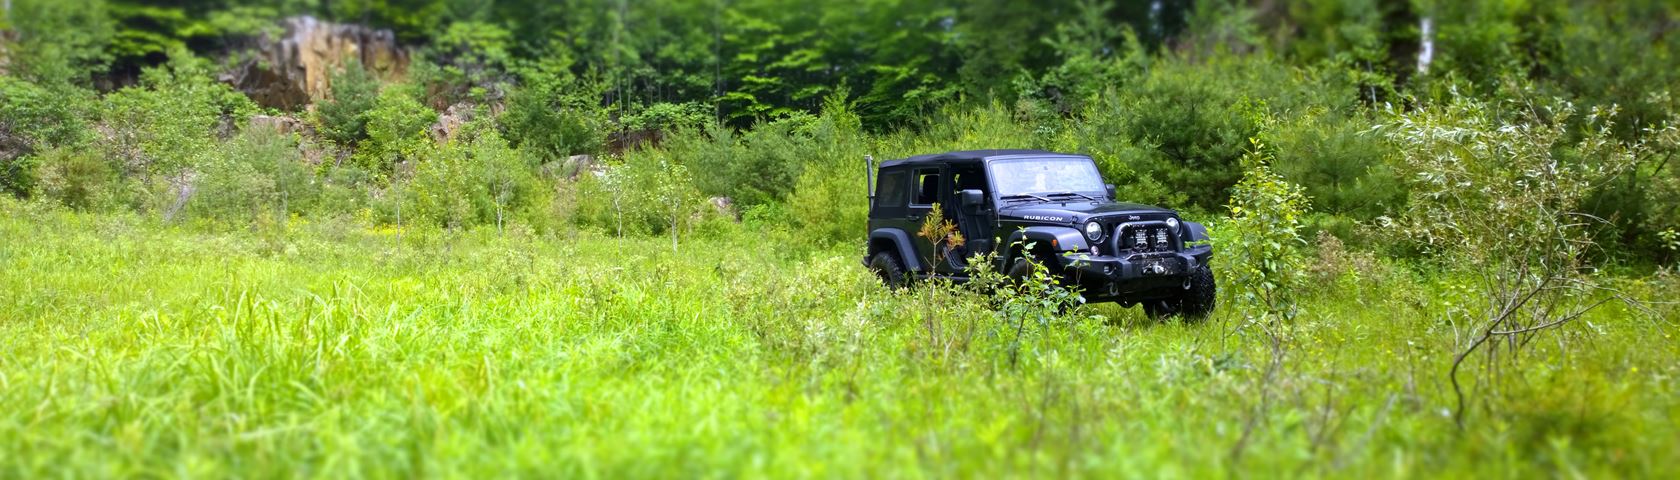 Jeep Rubicon in field